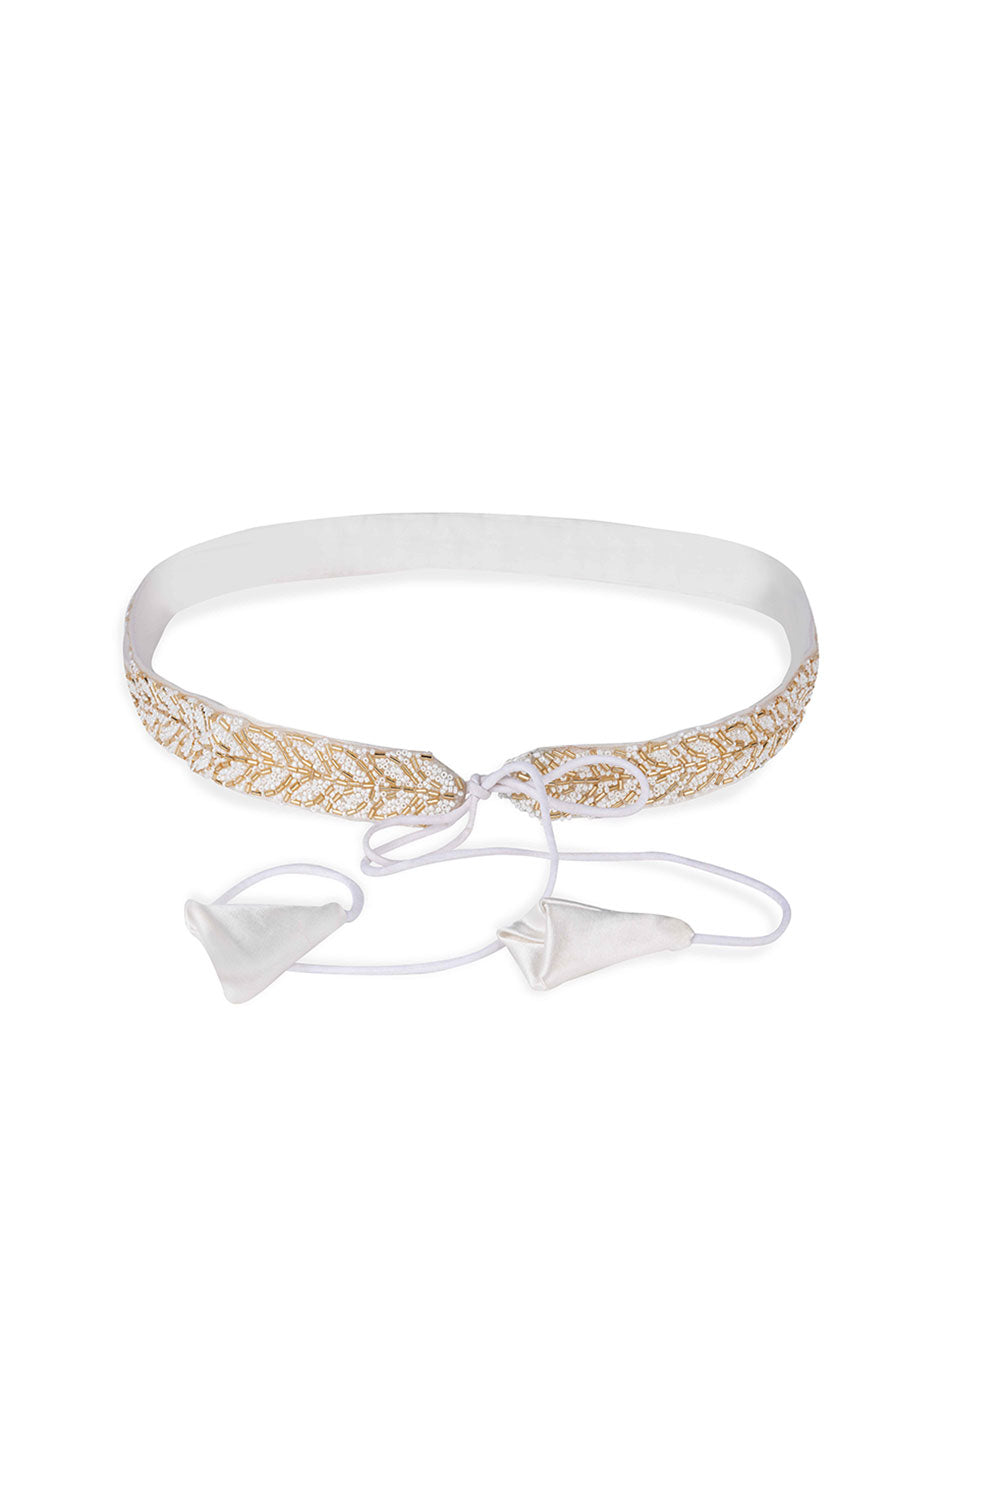 Buy Athena White & Gold Beads Leaf Design Tie Belt for Saree & Dresses Online - One Minute Saree